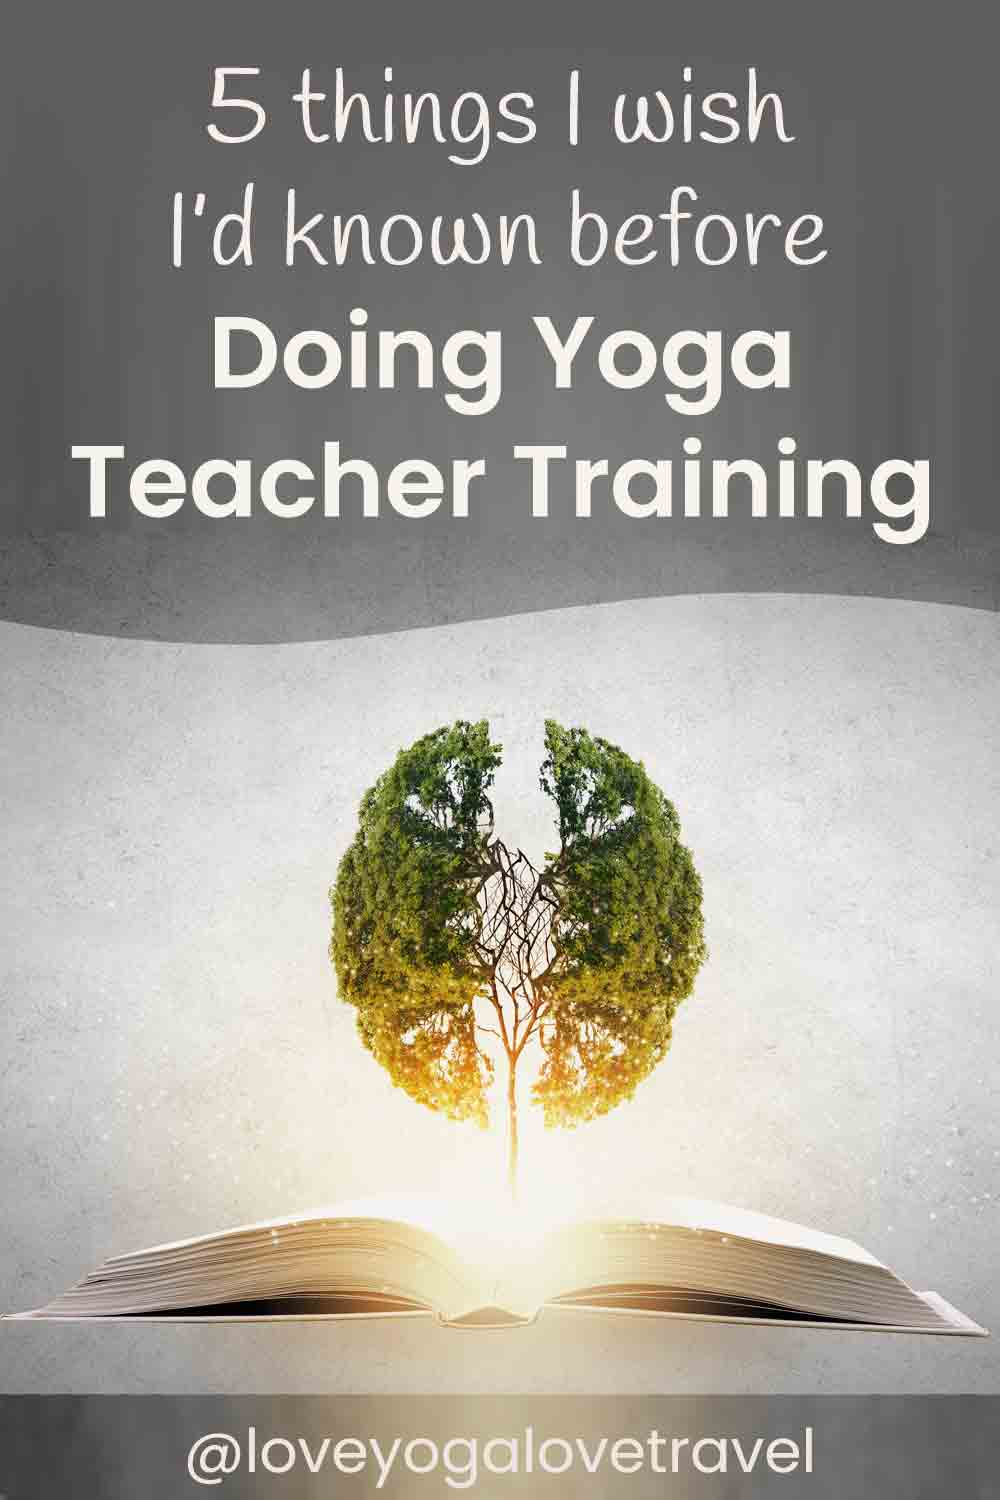 6 Best Destinations for Yoga Teacher Training Abroad